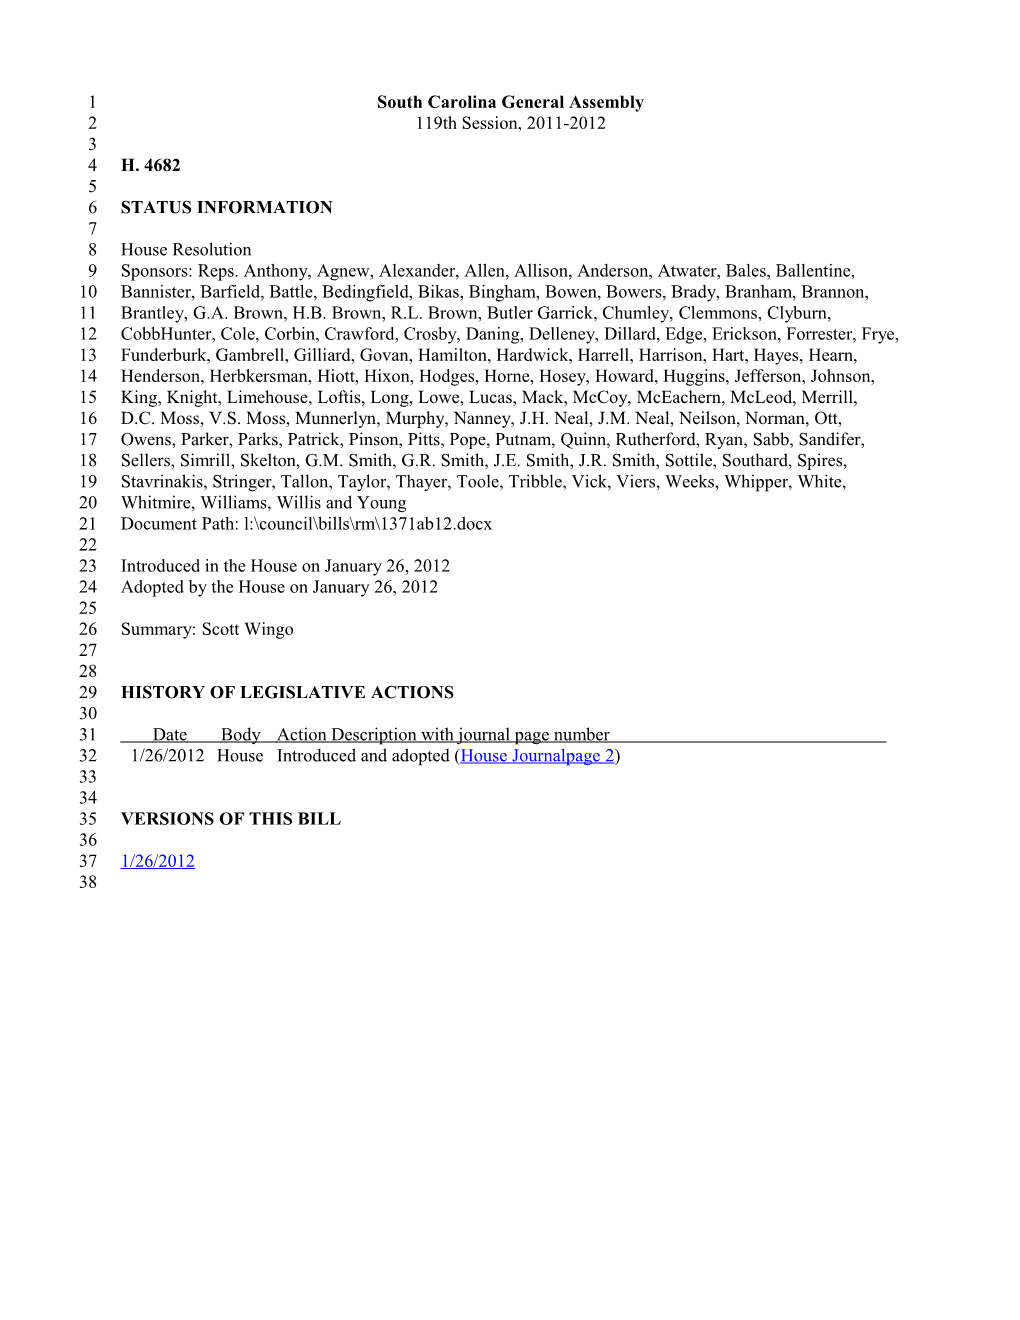 2011-2012 Bill 4682: Scott Wingo - South Carolina Legislature Online